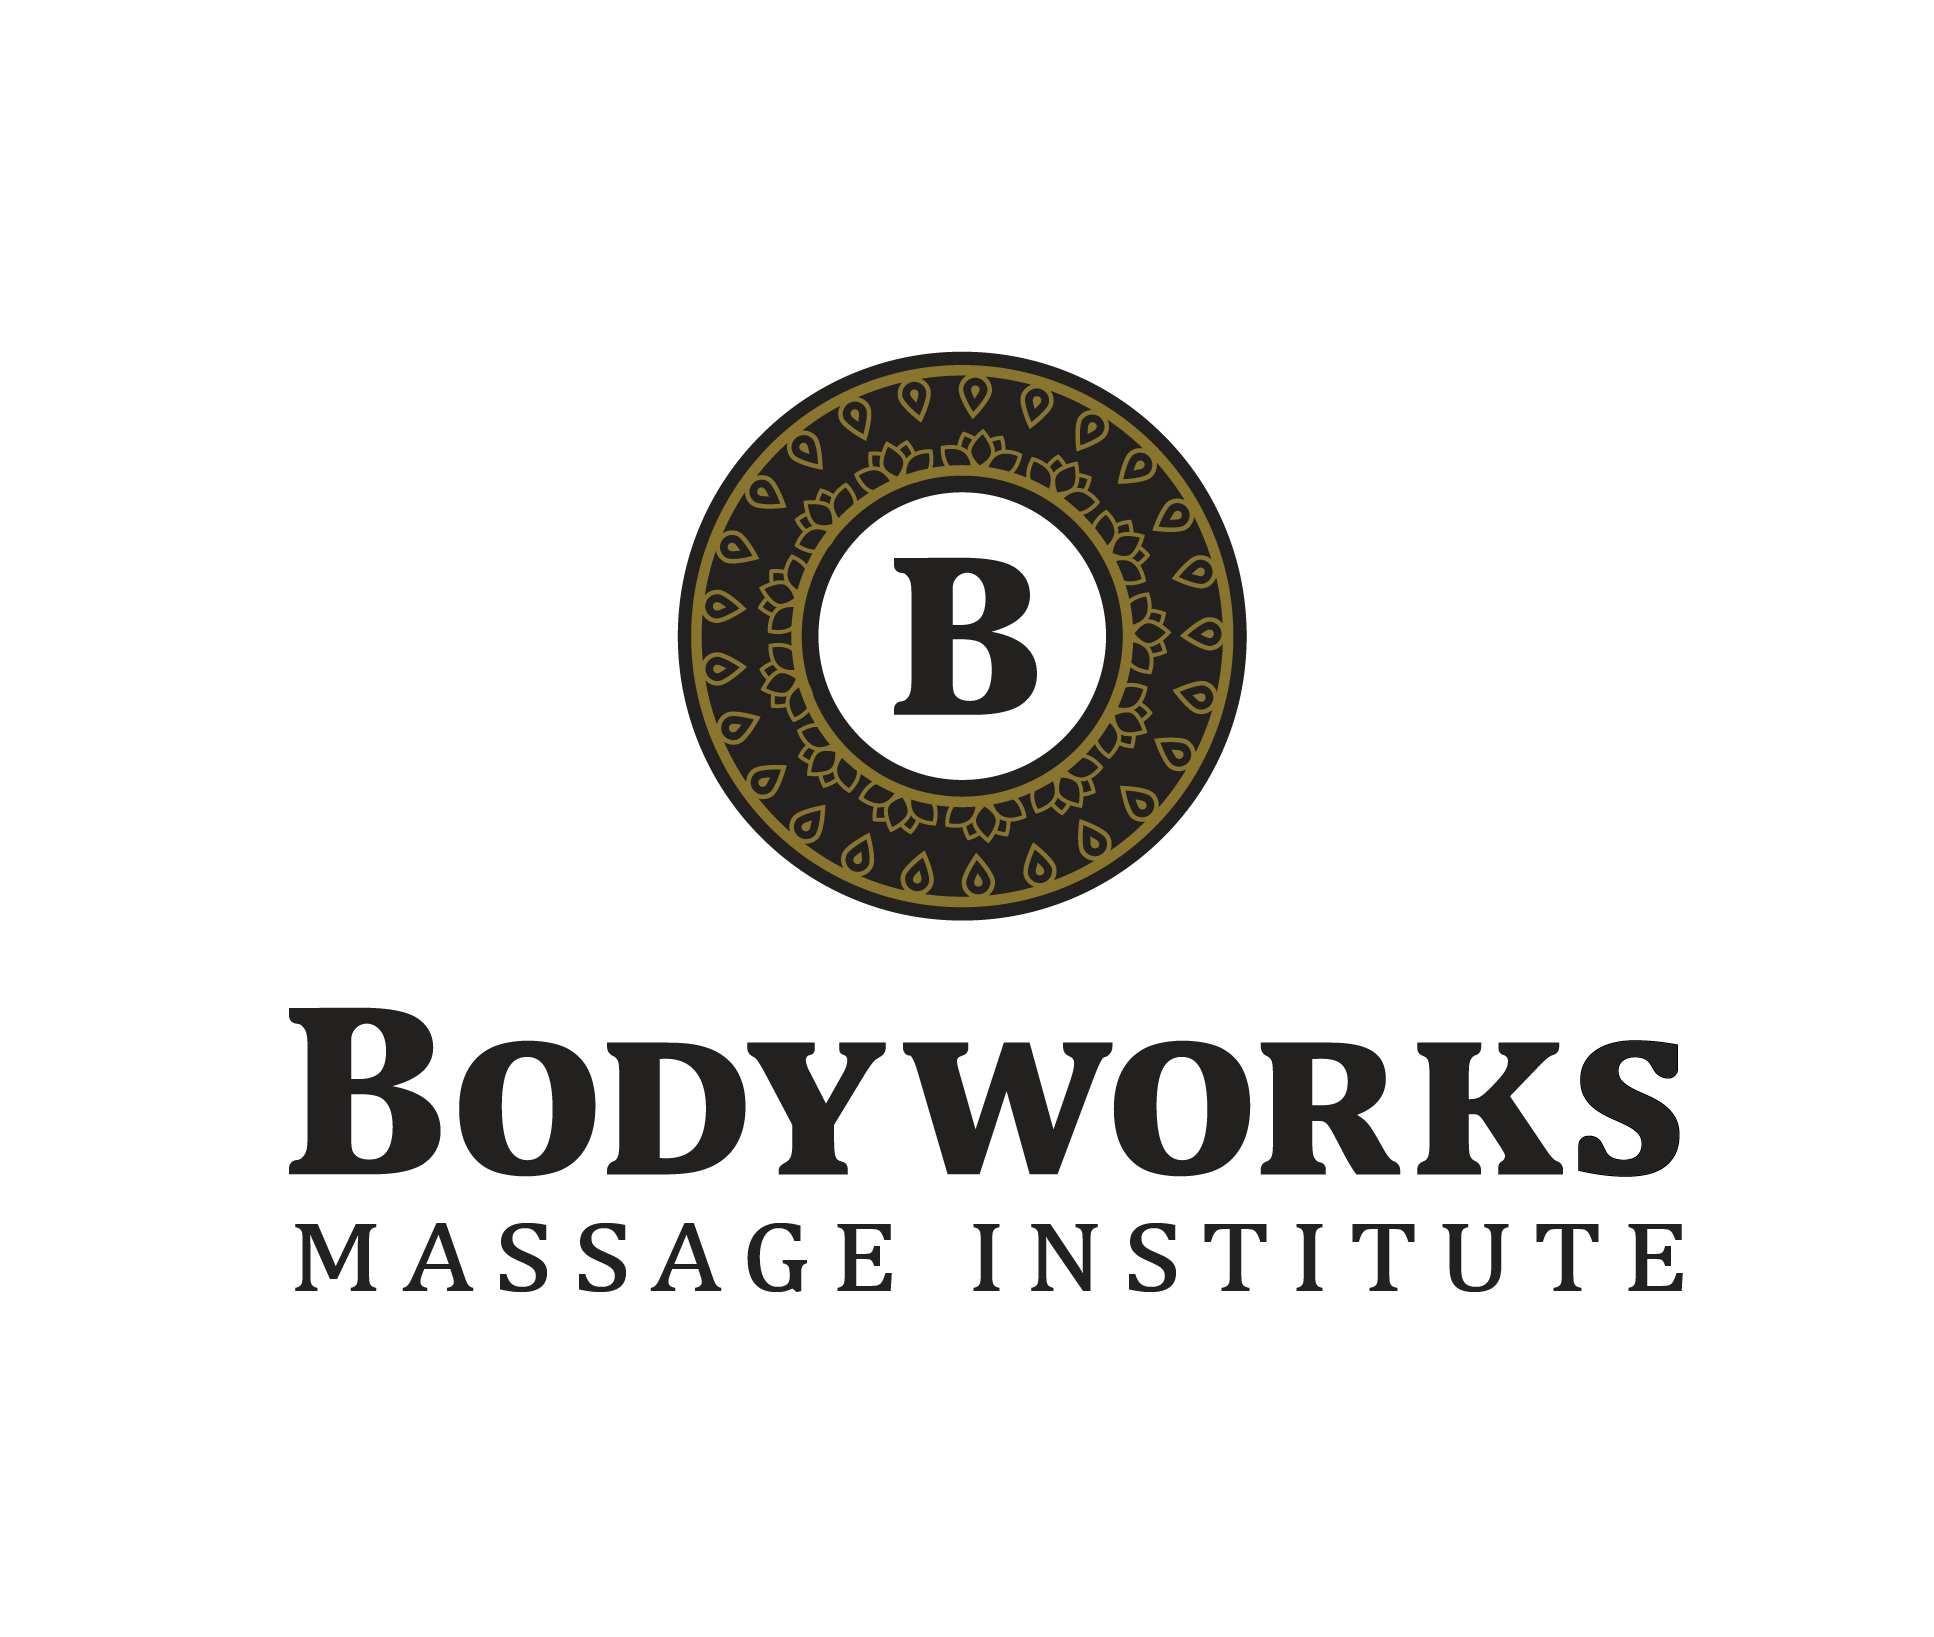 Home Bodyworks Massage